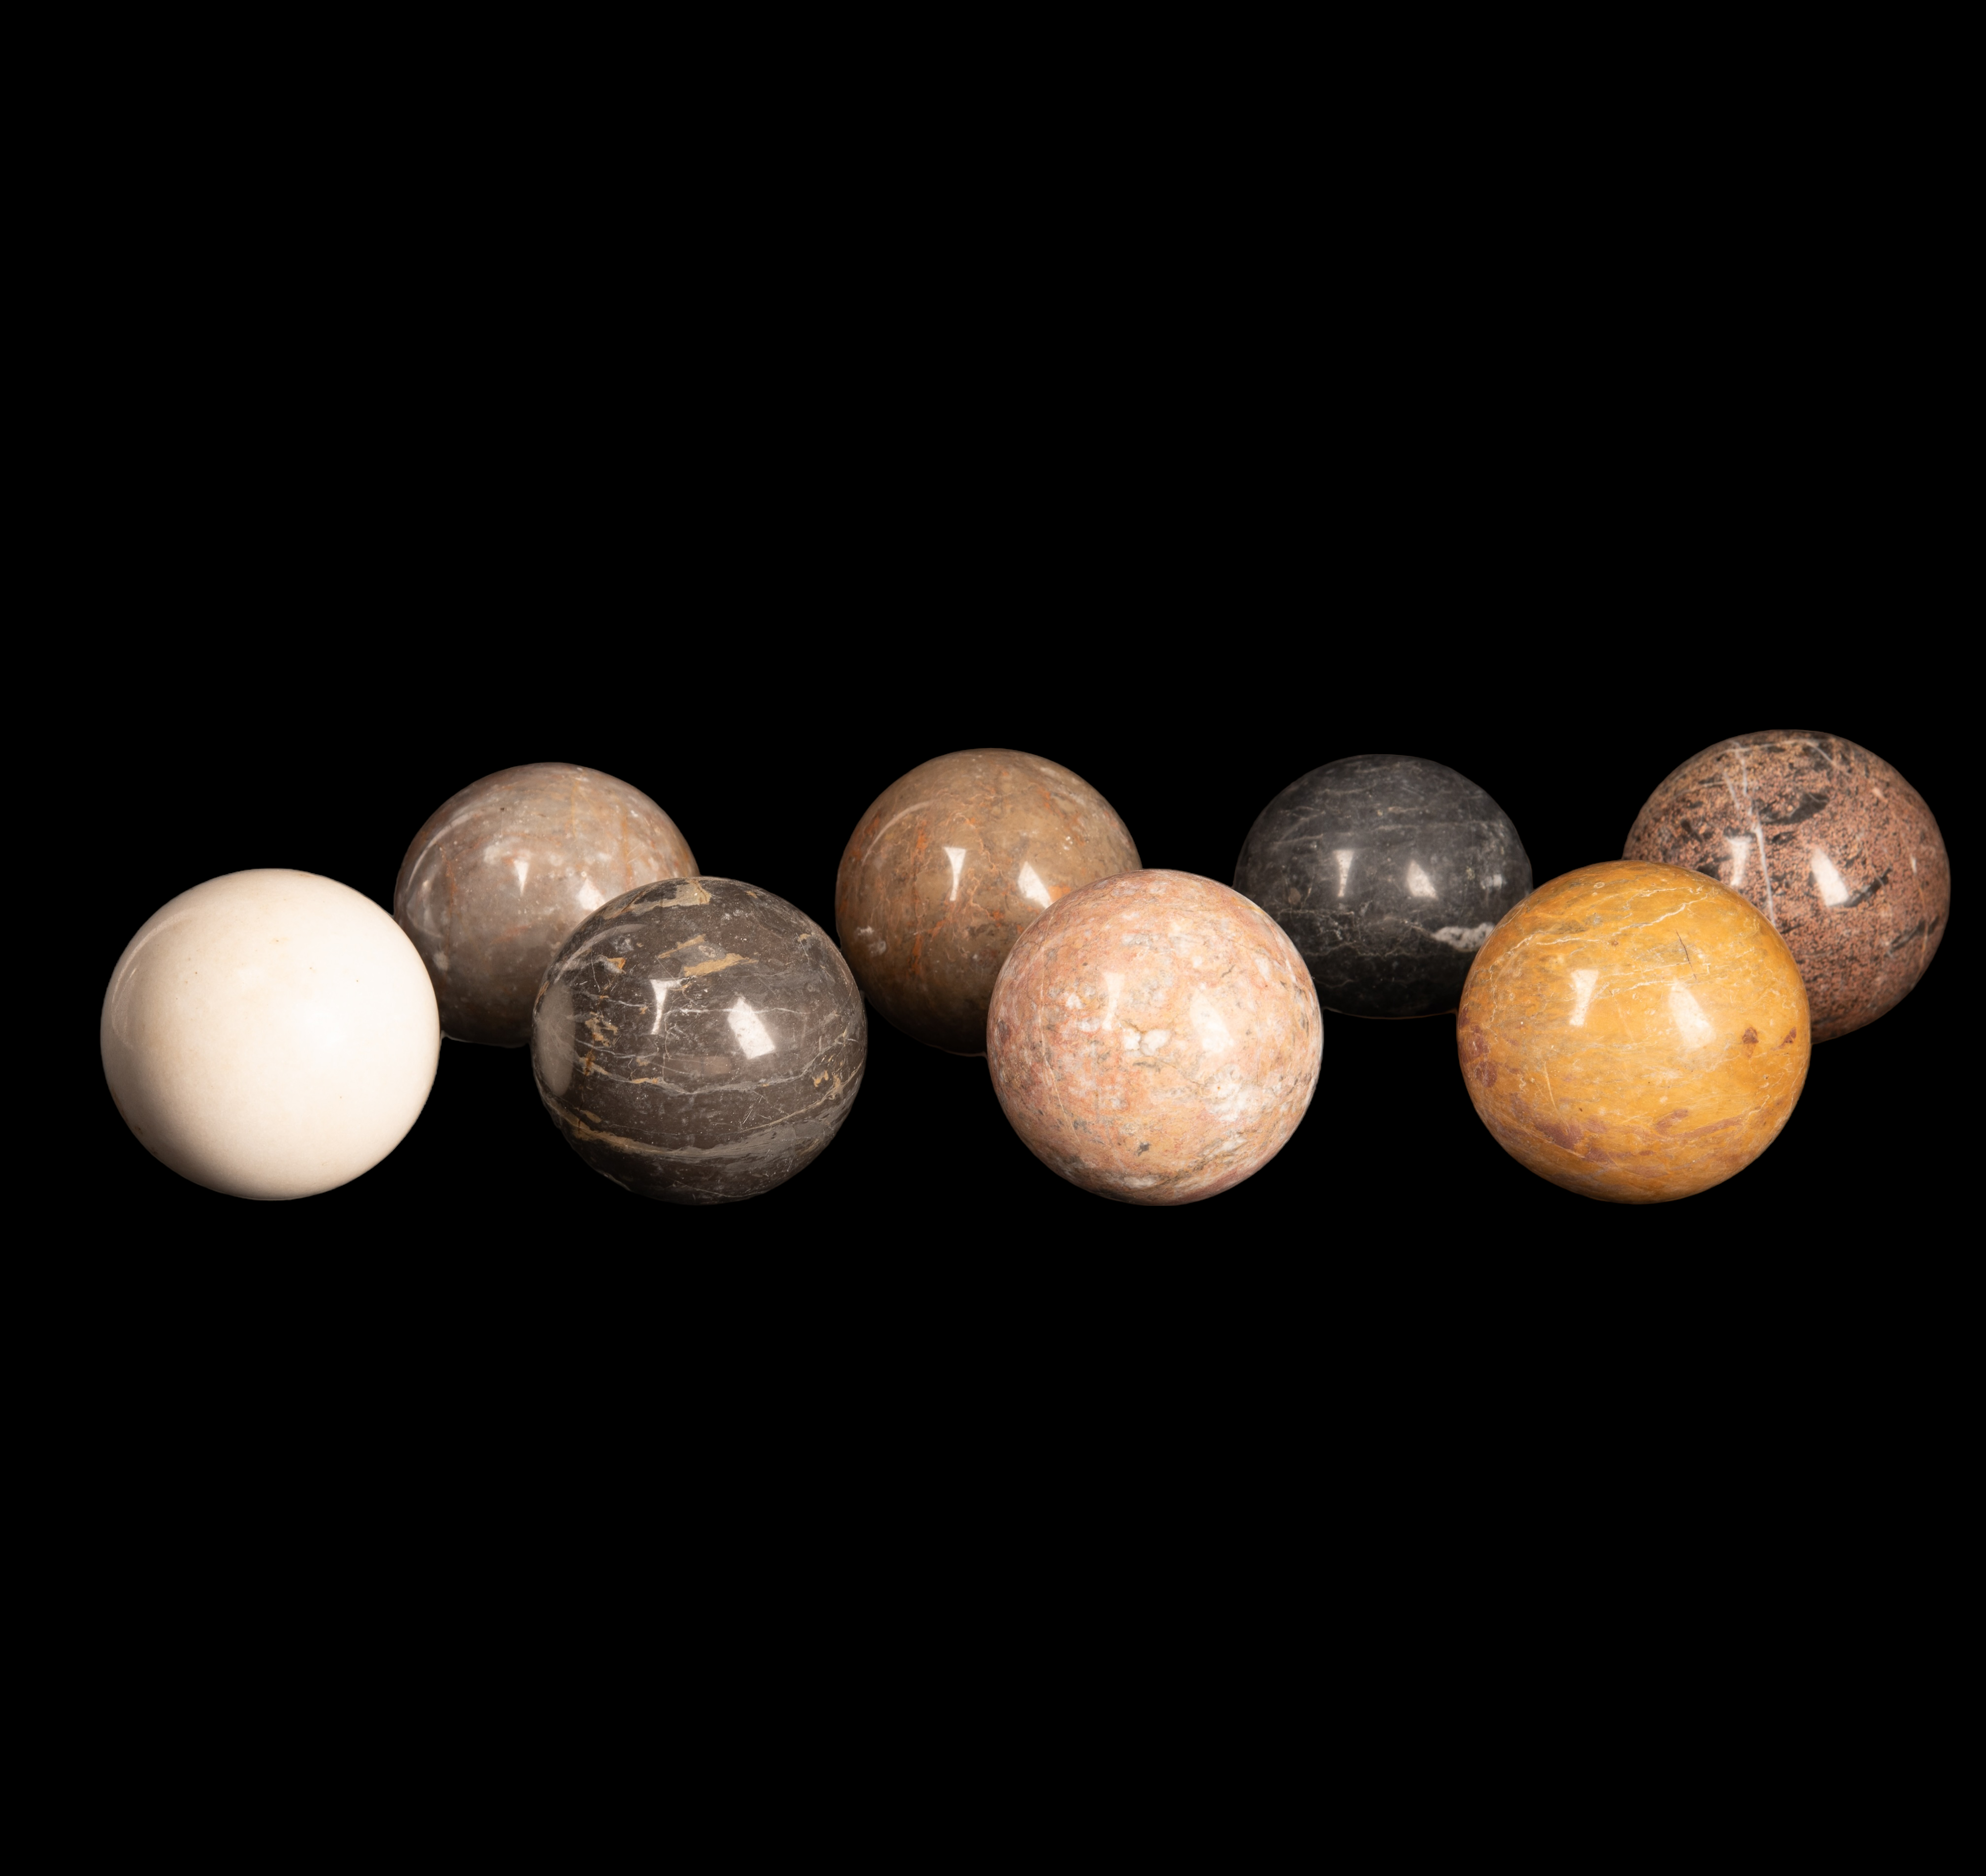  8 Polished stone bocce ball spheres  3b1ab1